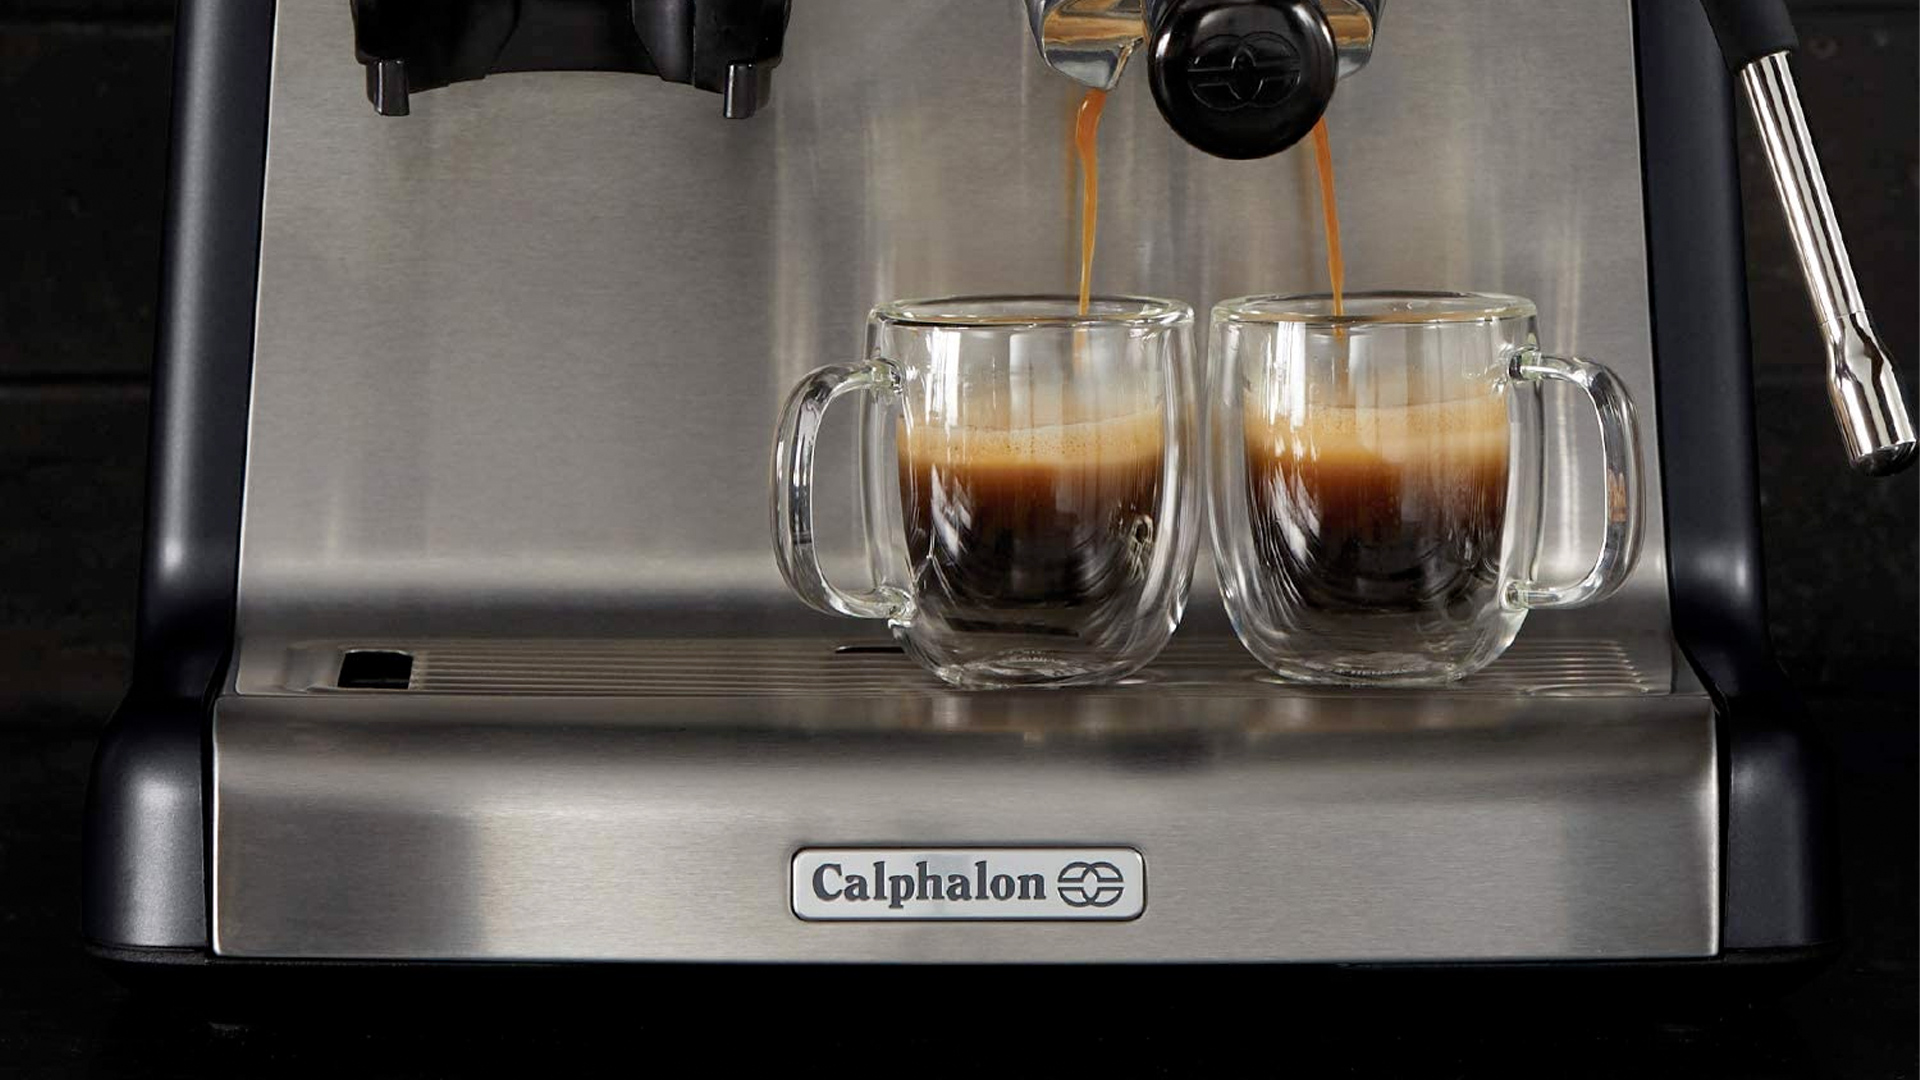 https://9to5toys.com/wp-content/uploads/sites/5/2021/10/calphalon-temp-iq-espresso-brewer.jpg